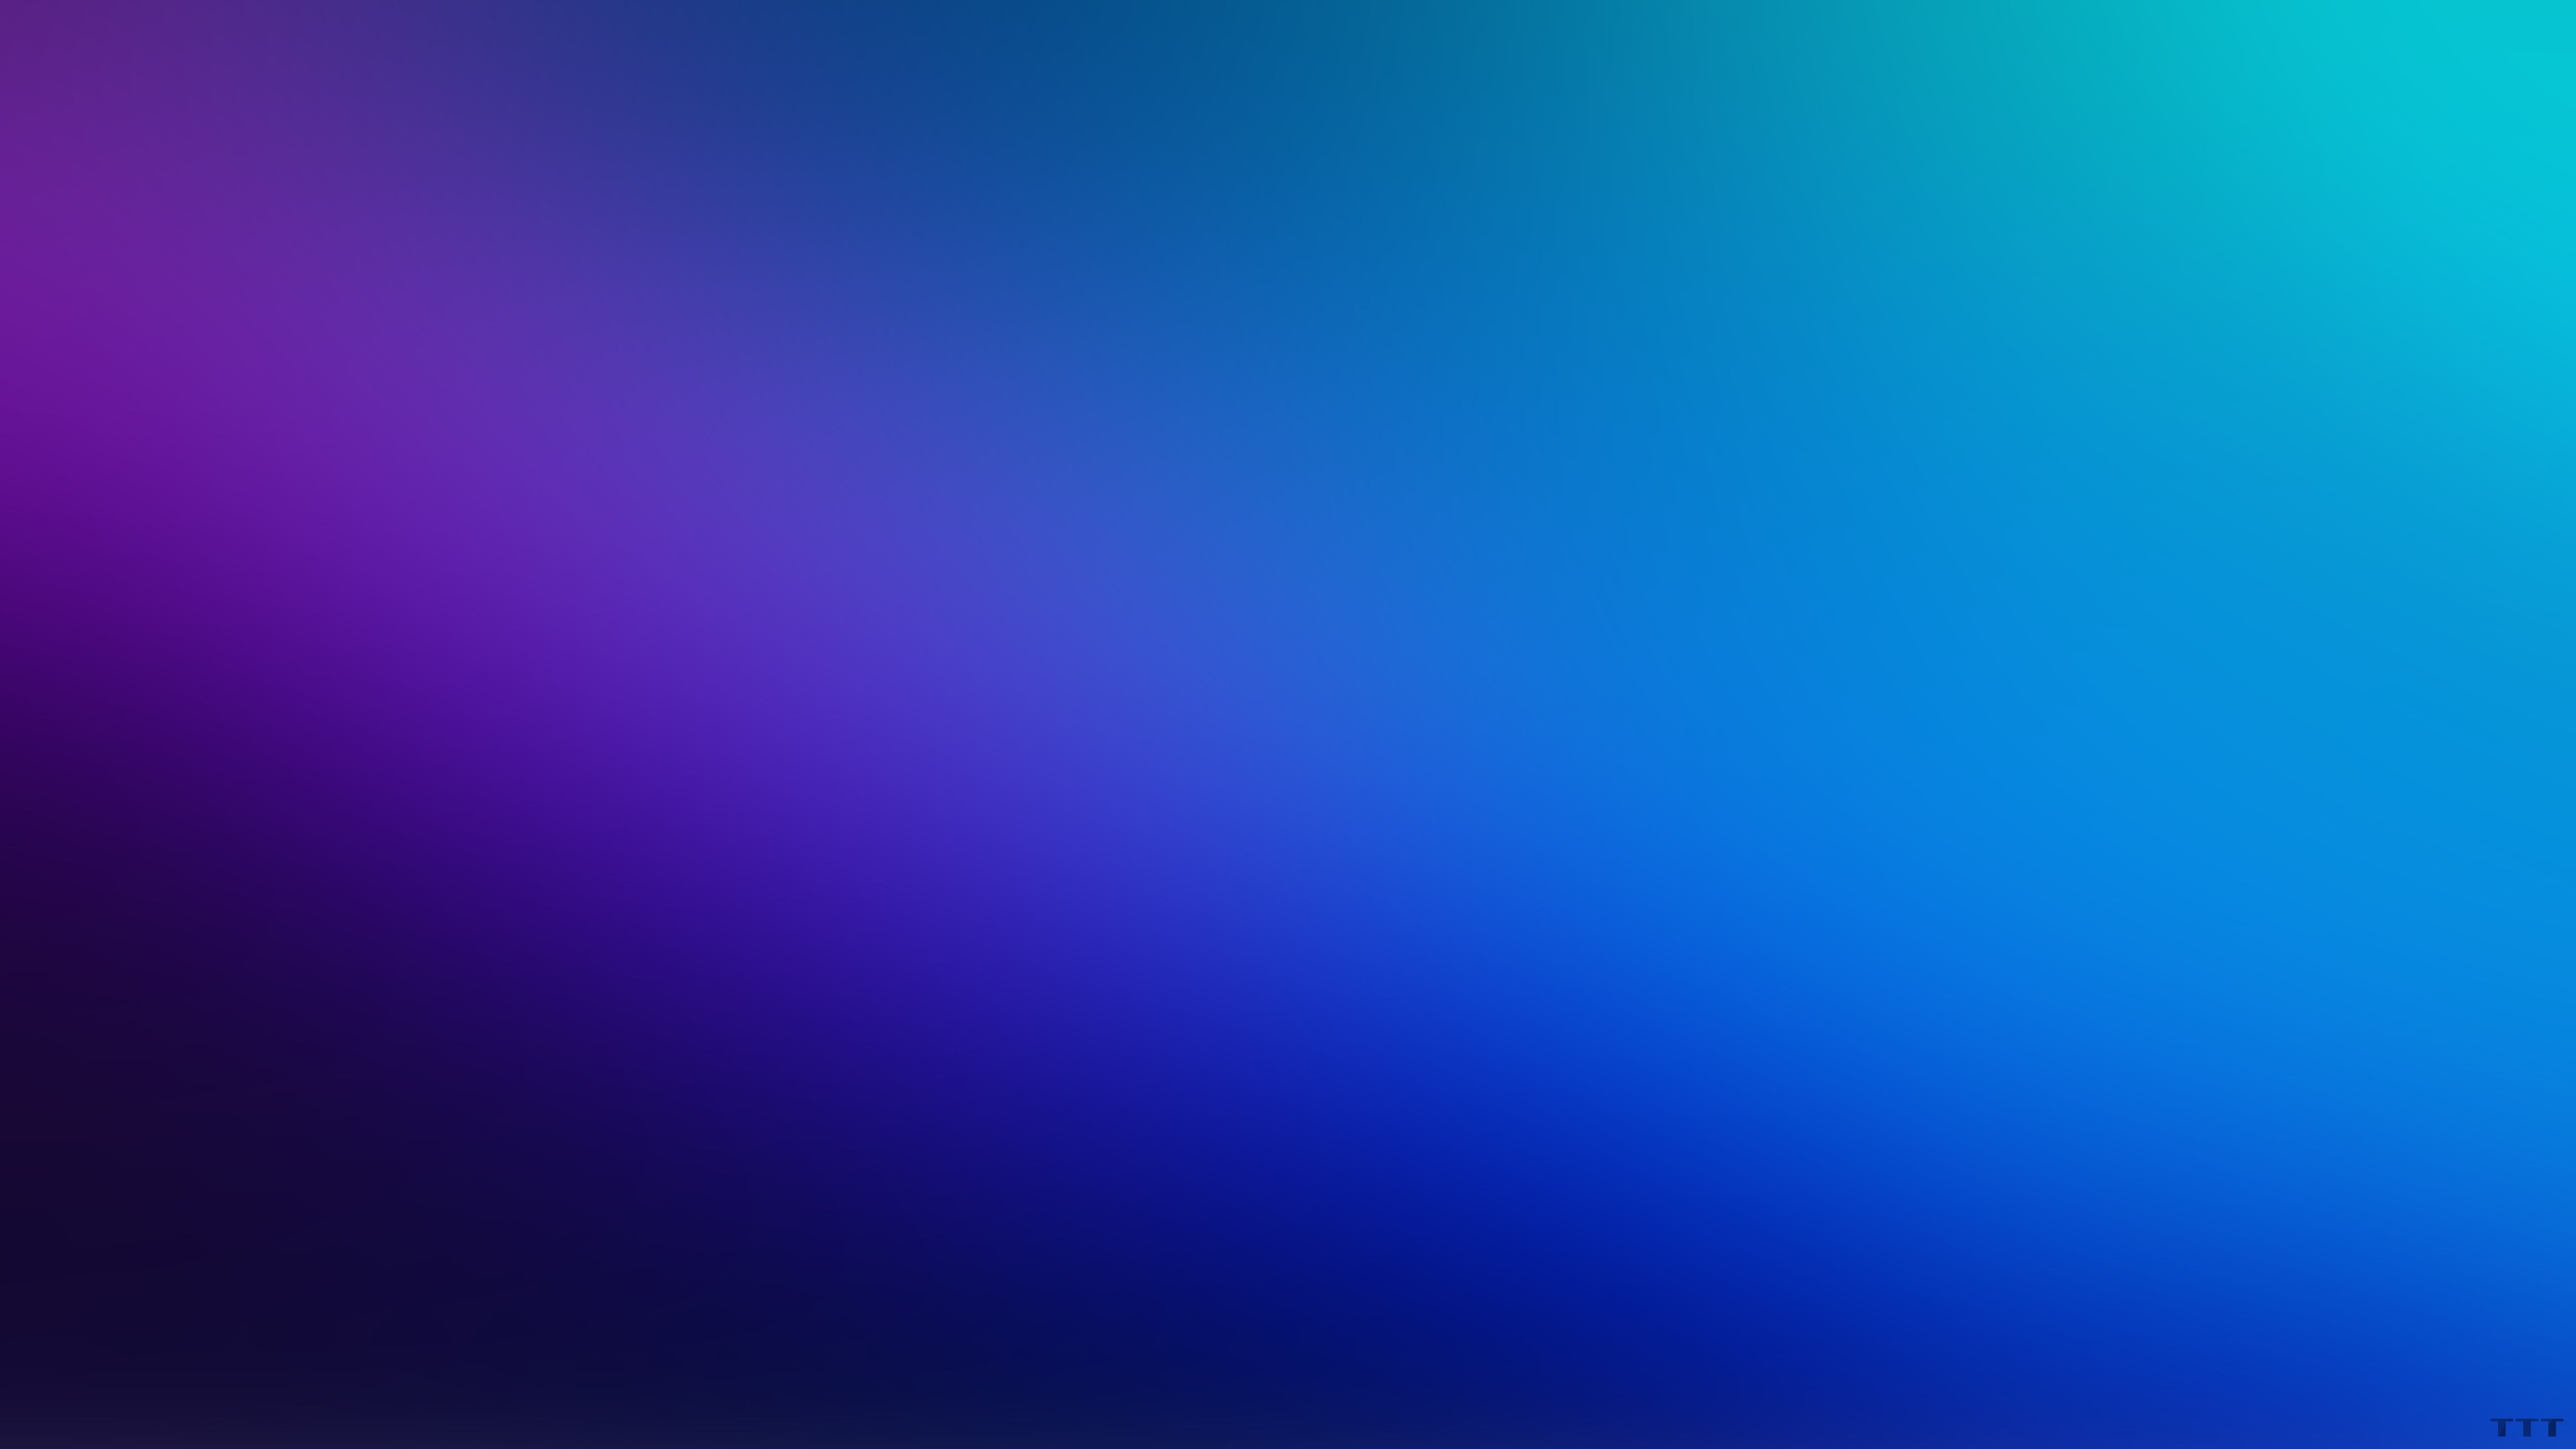 Blue Violet Minimal Gradient 8K Wallpaper, HD Minimalist 4K Wallpaper, Image, Photo and Background